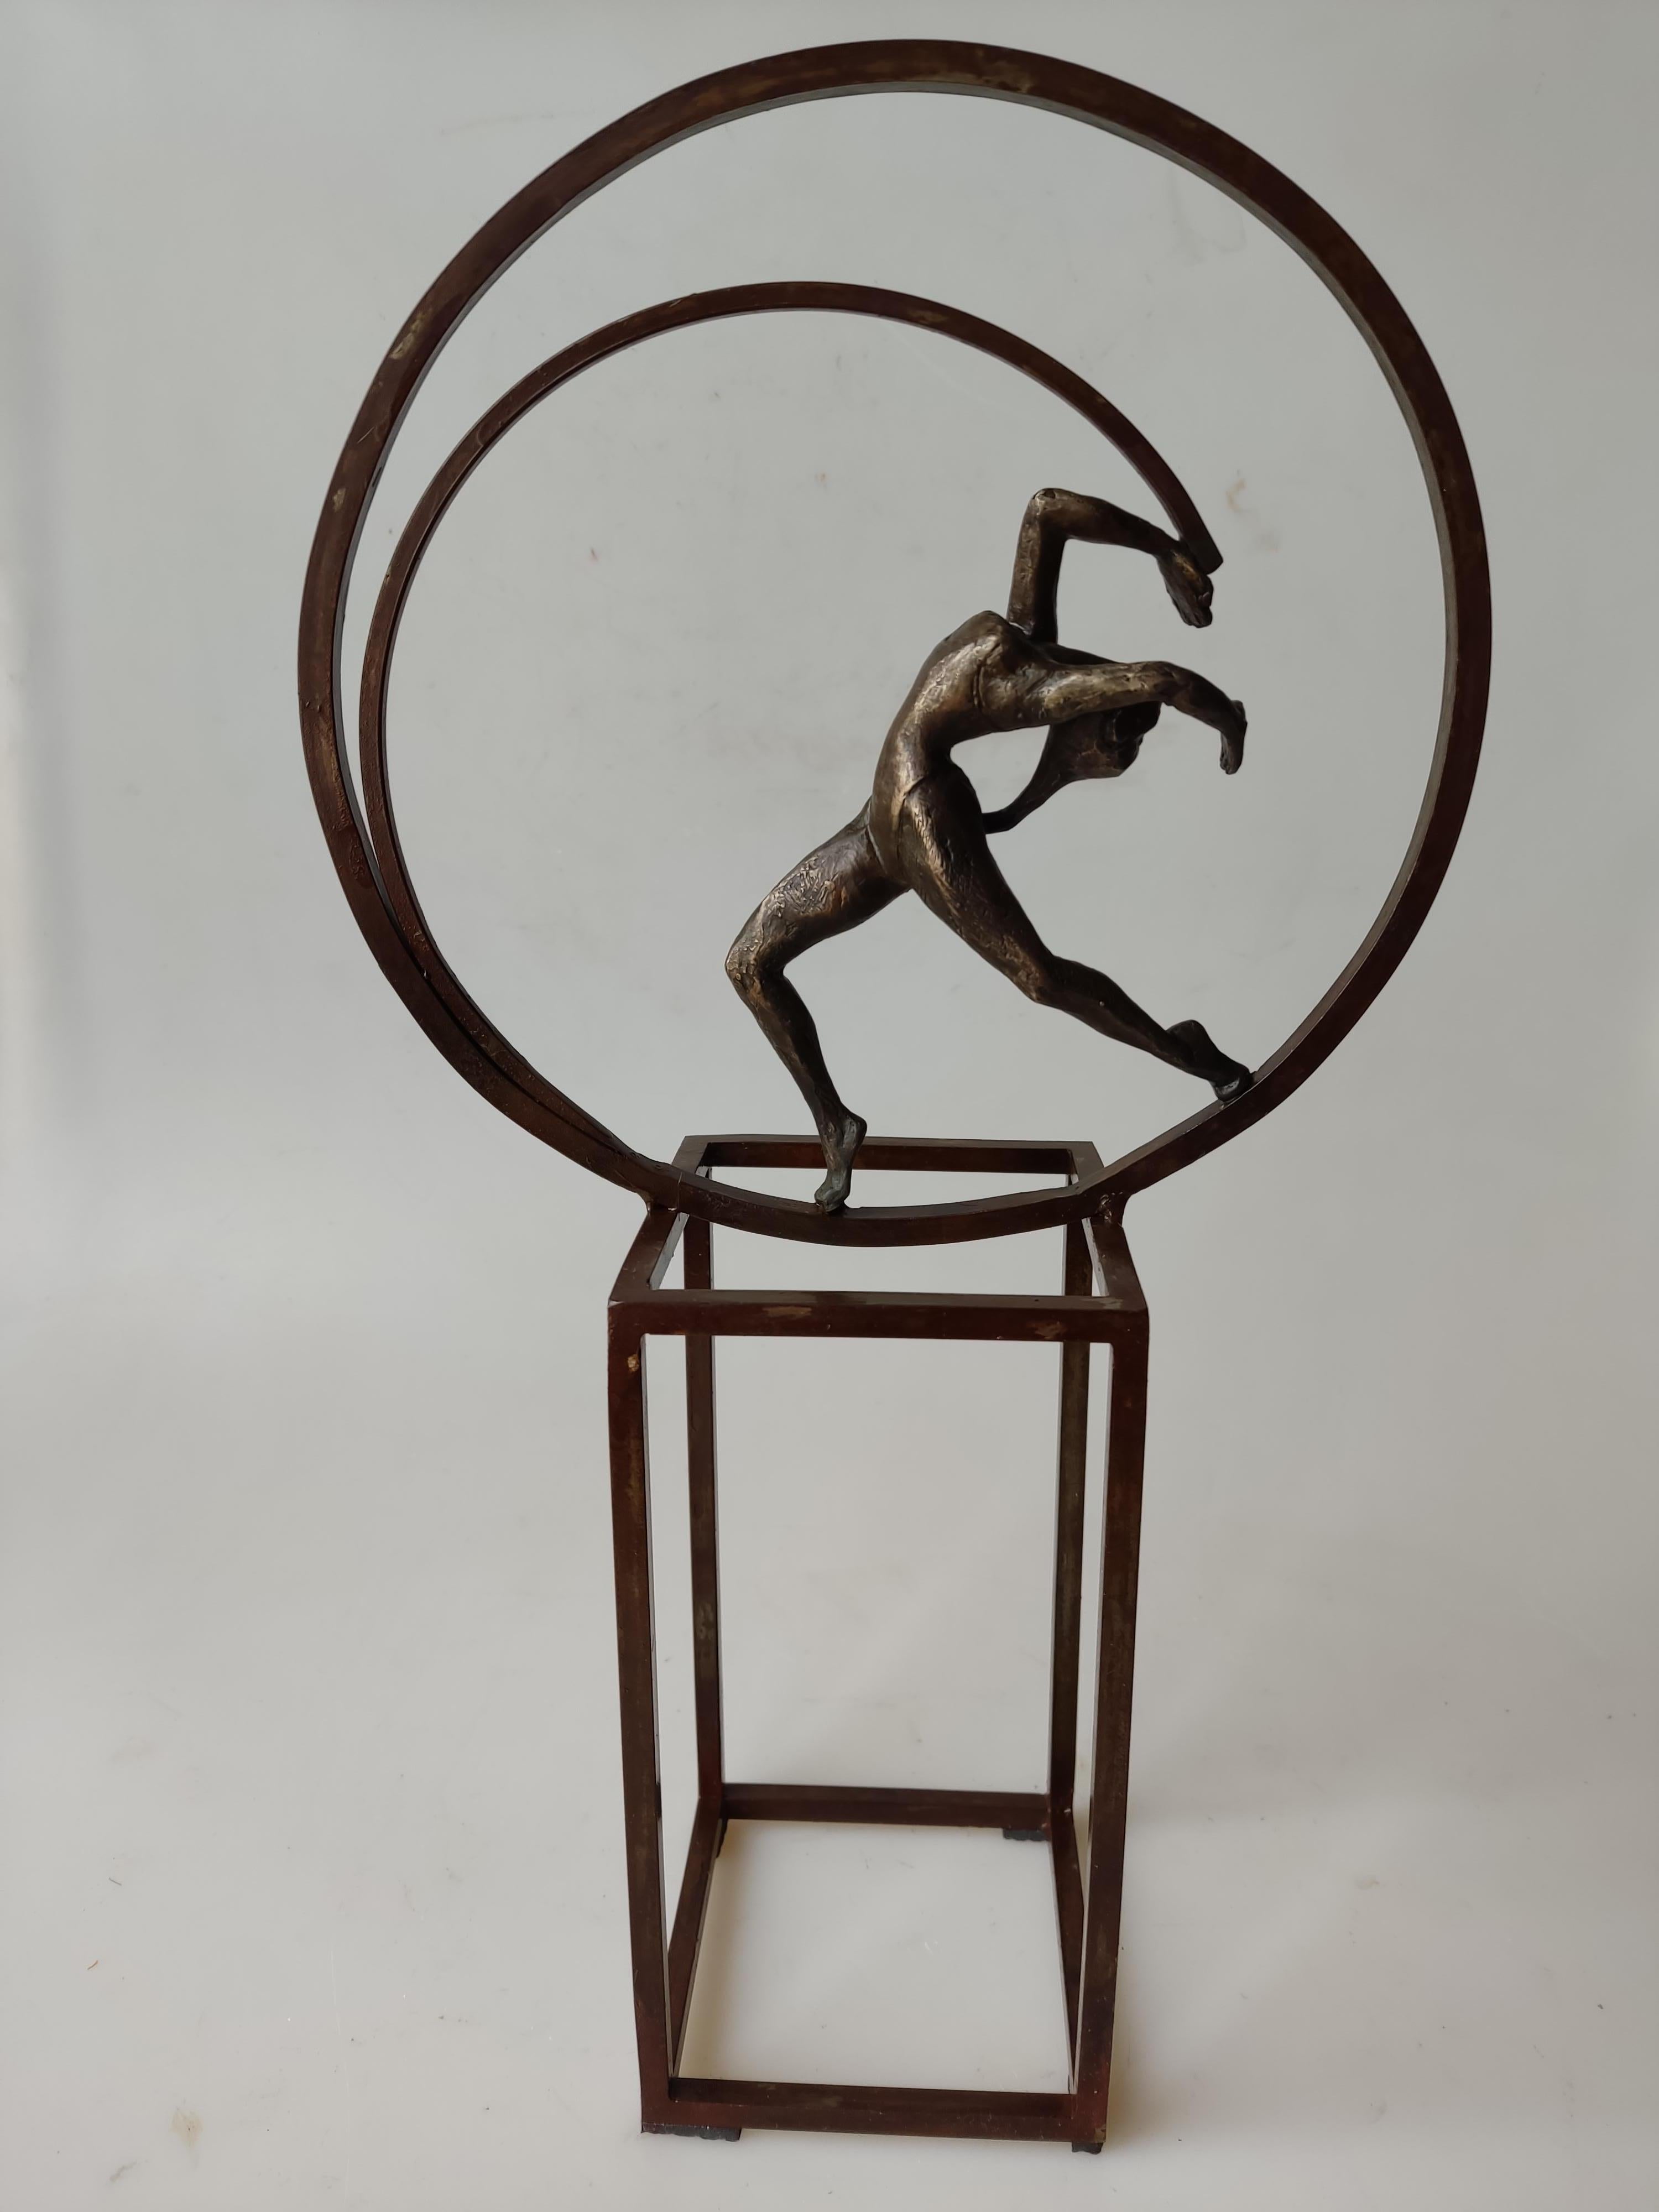 Joan Artigas Planas Figurative Sculpture - "Life" contemporary bronze table, mural sculpture figurative girl relax dance